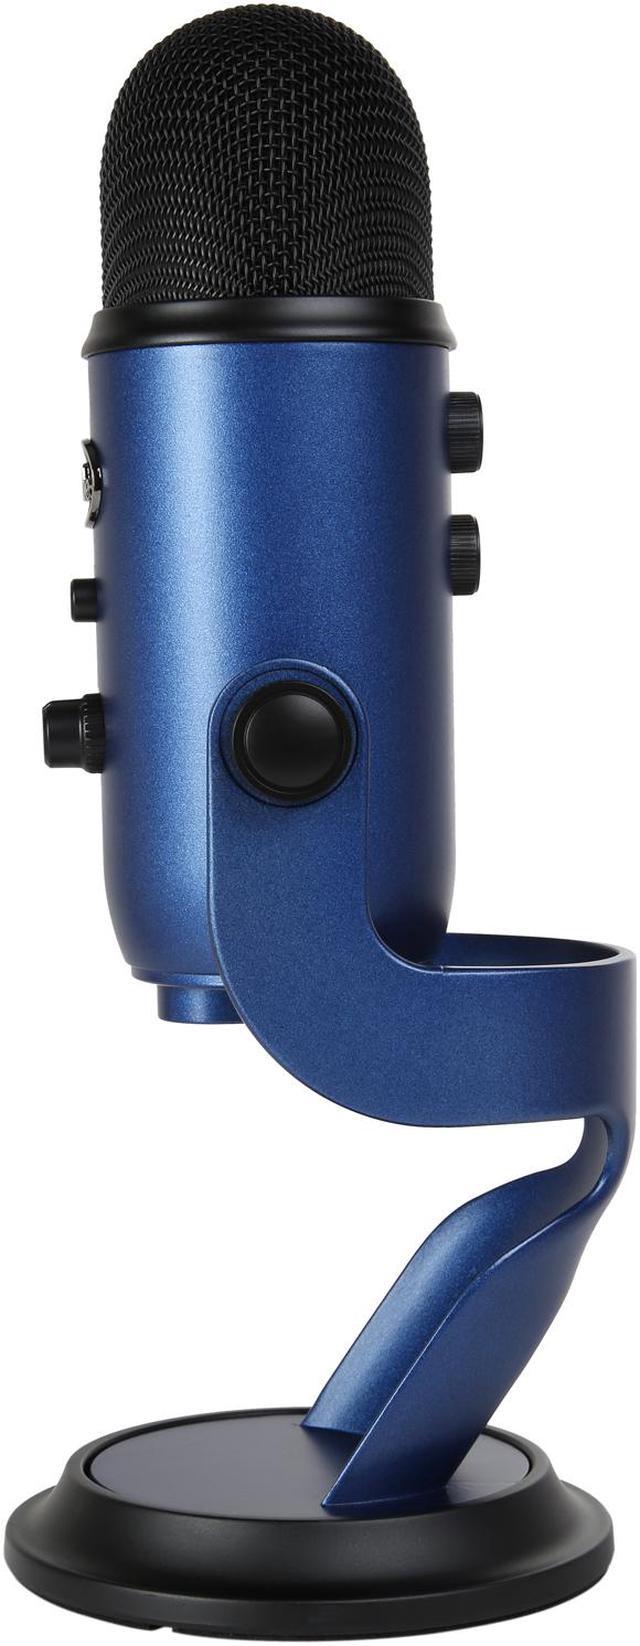 Blue Yeti USB Streaming Microphone - Midnight Blue 988-000101 